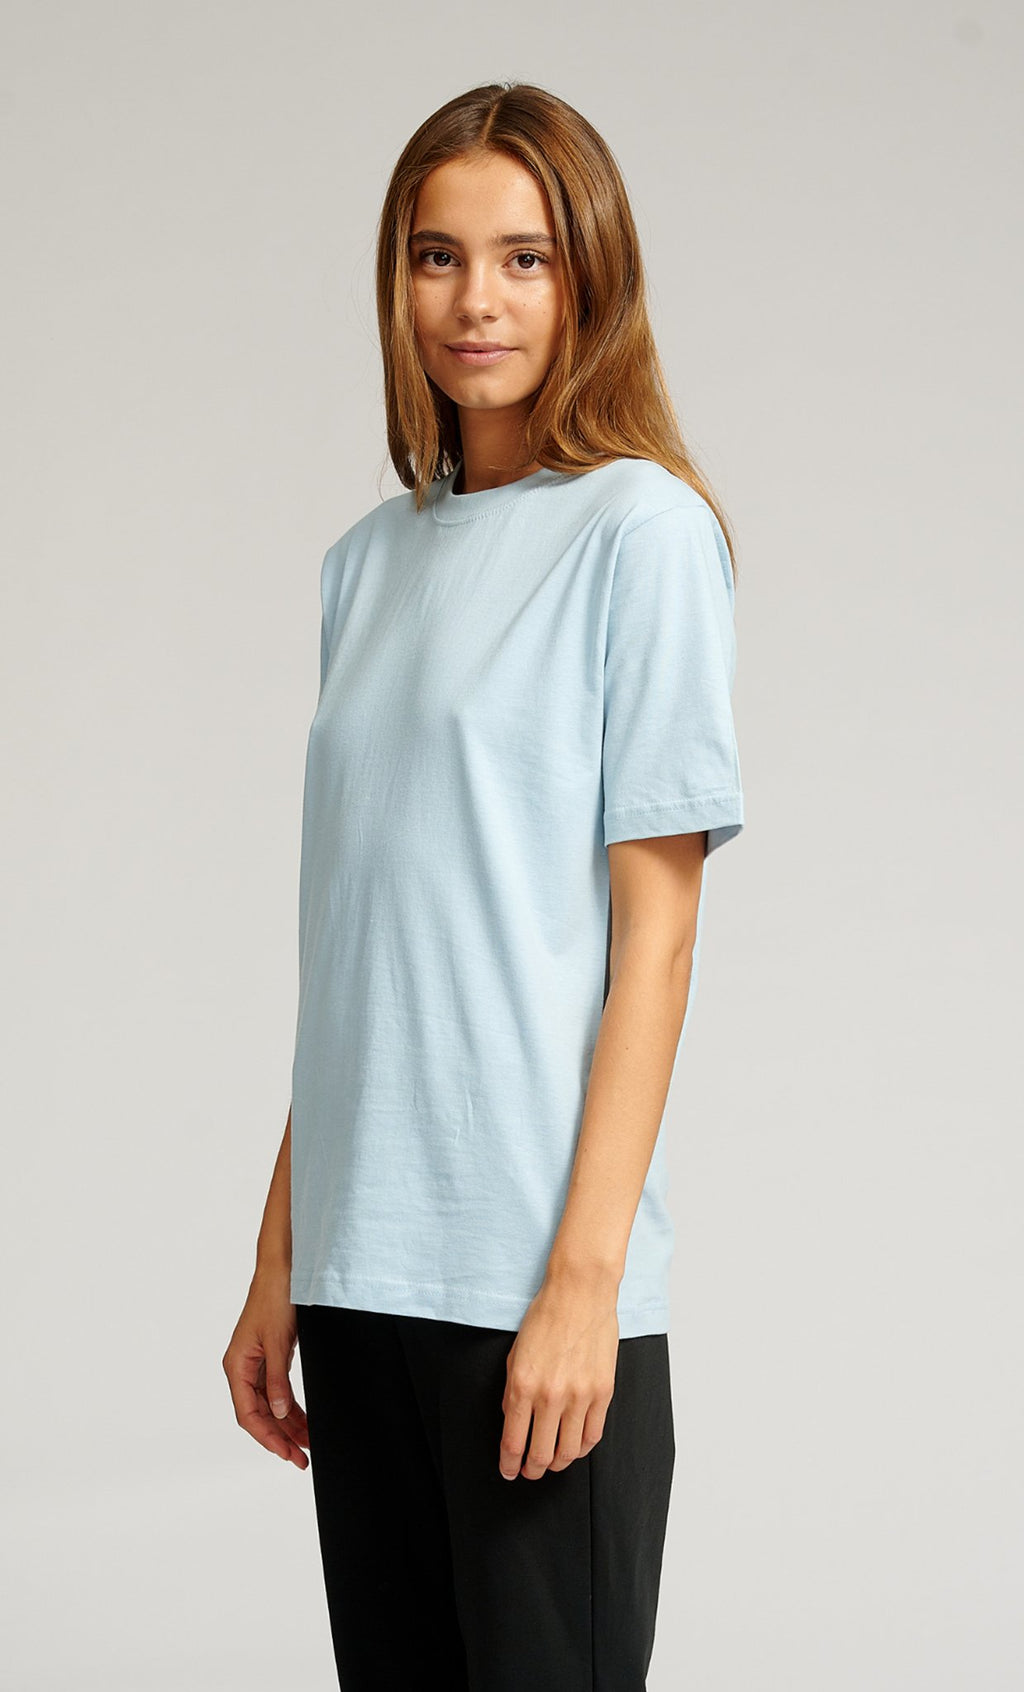 Camiseta de gran tamaño - Azul claro (mujeres)